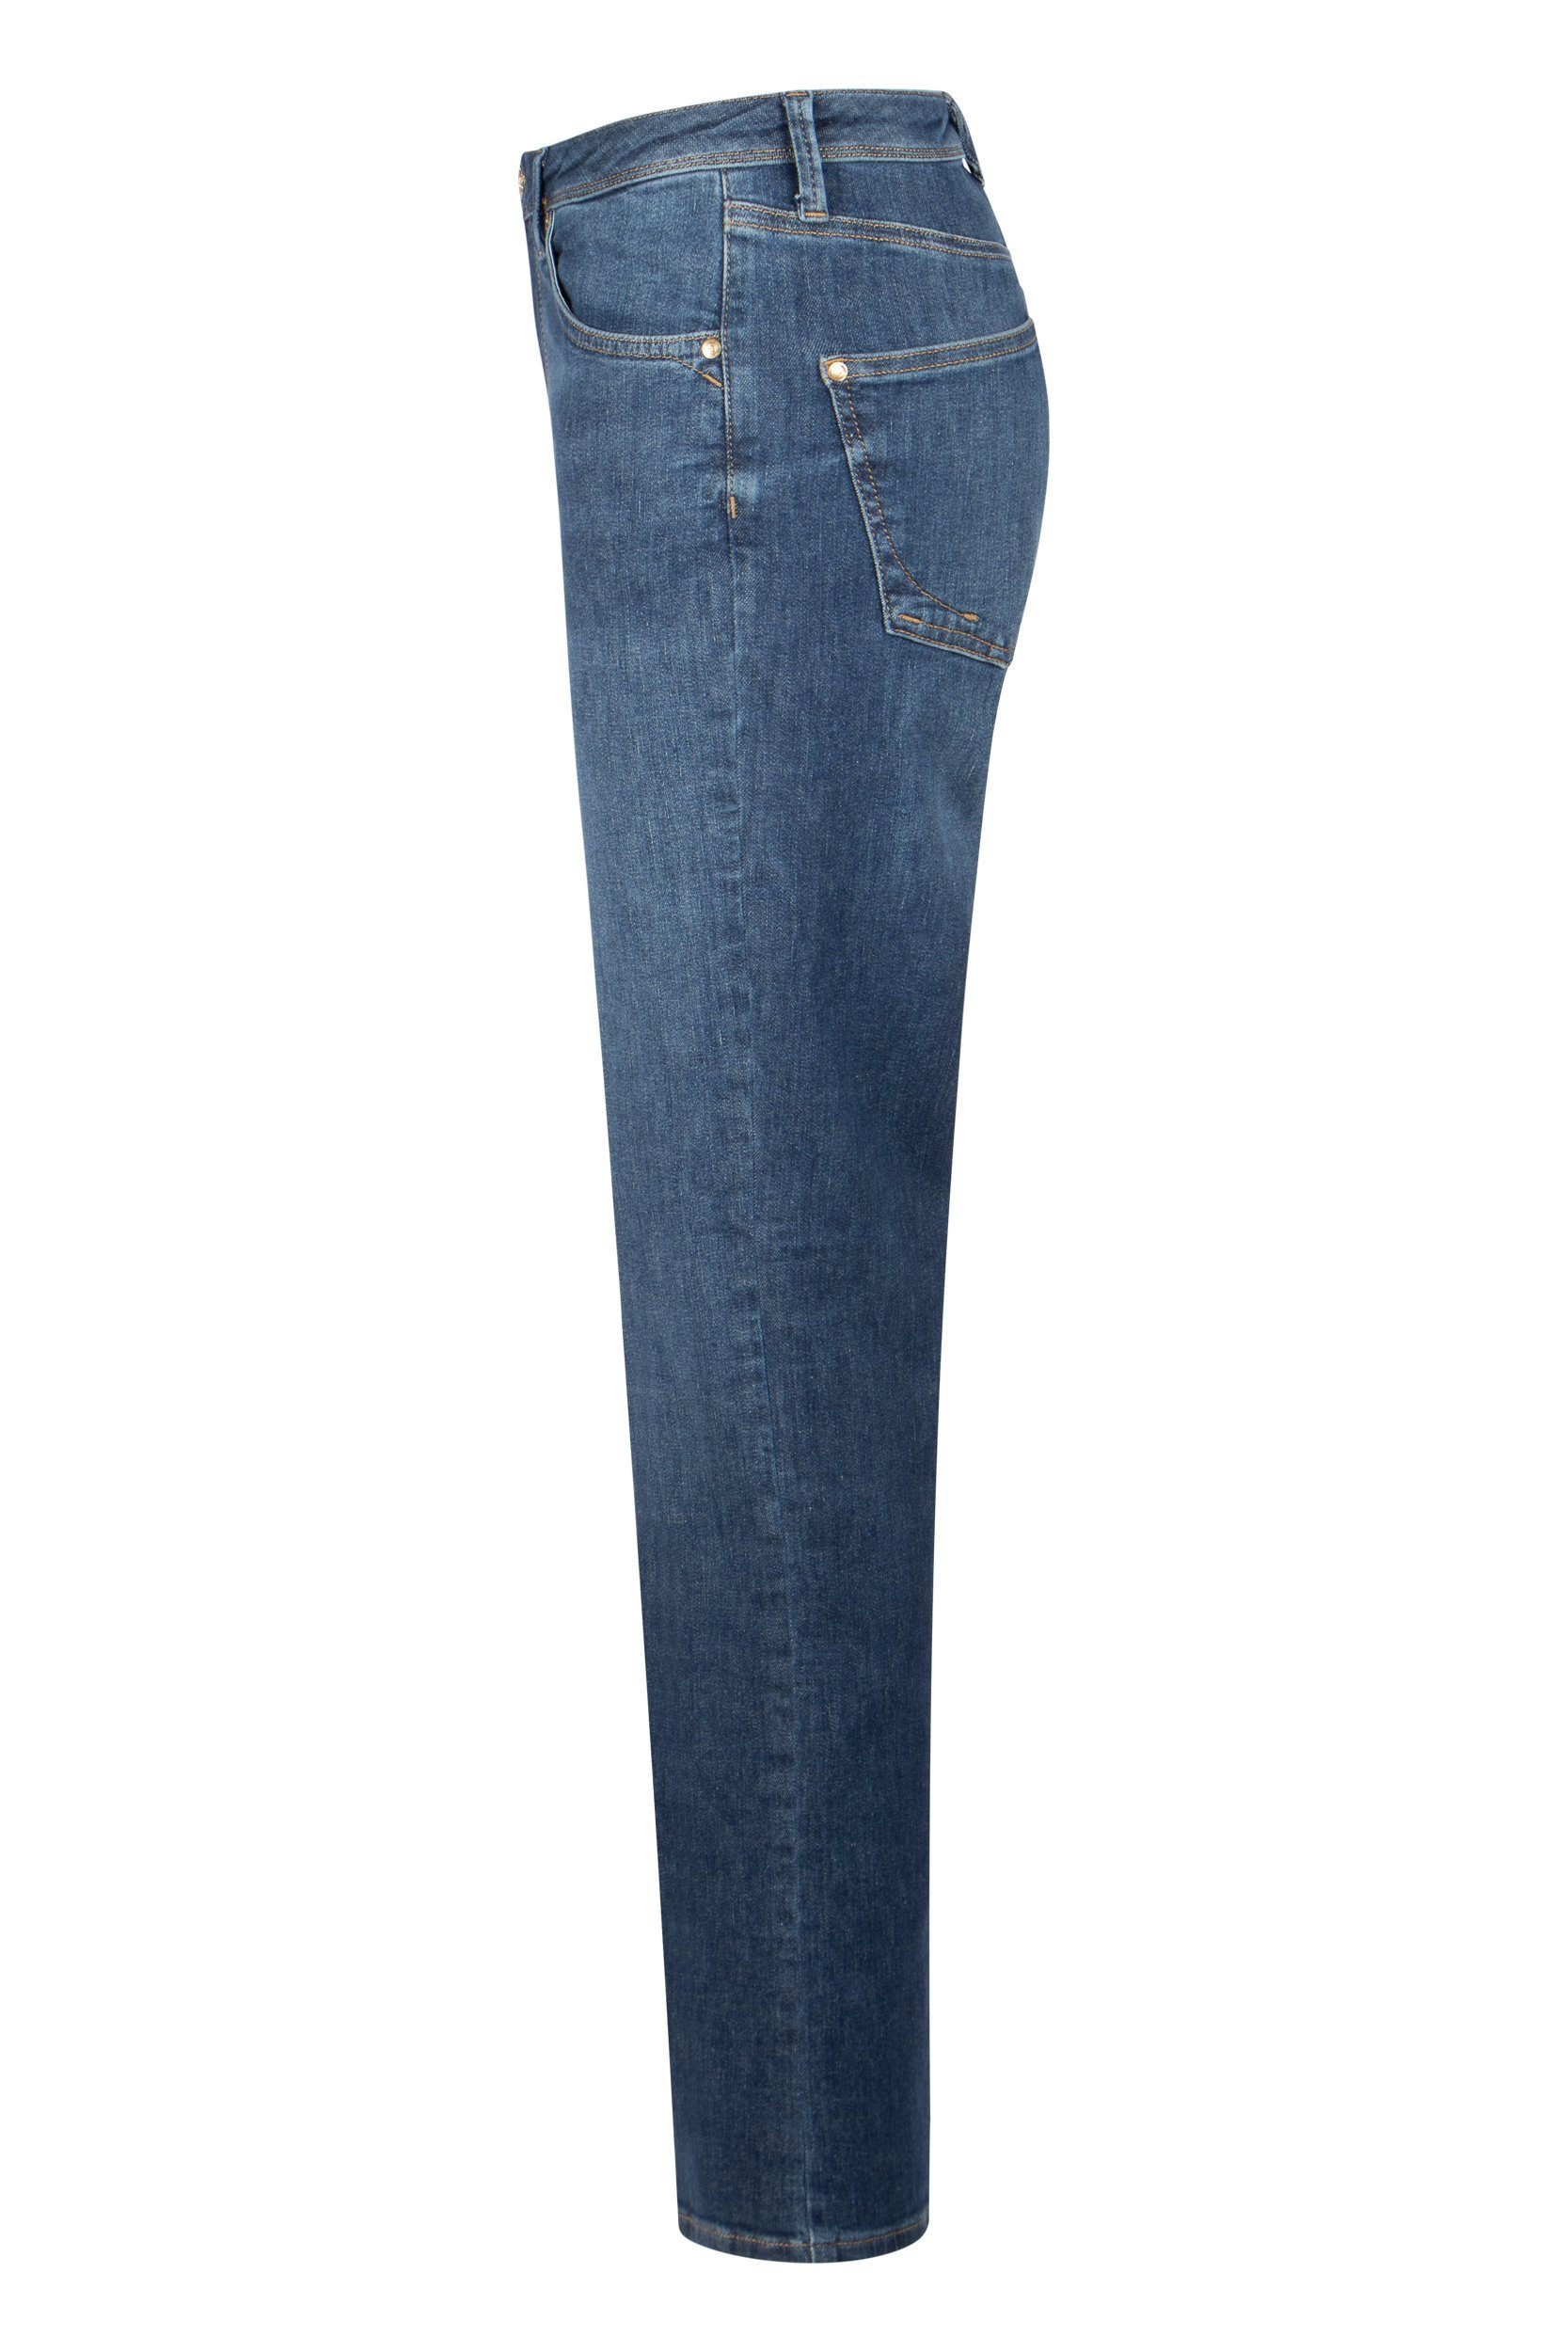 Raffaello Rossi 5-Pocket-Jeans Long B Kira